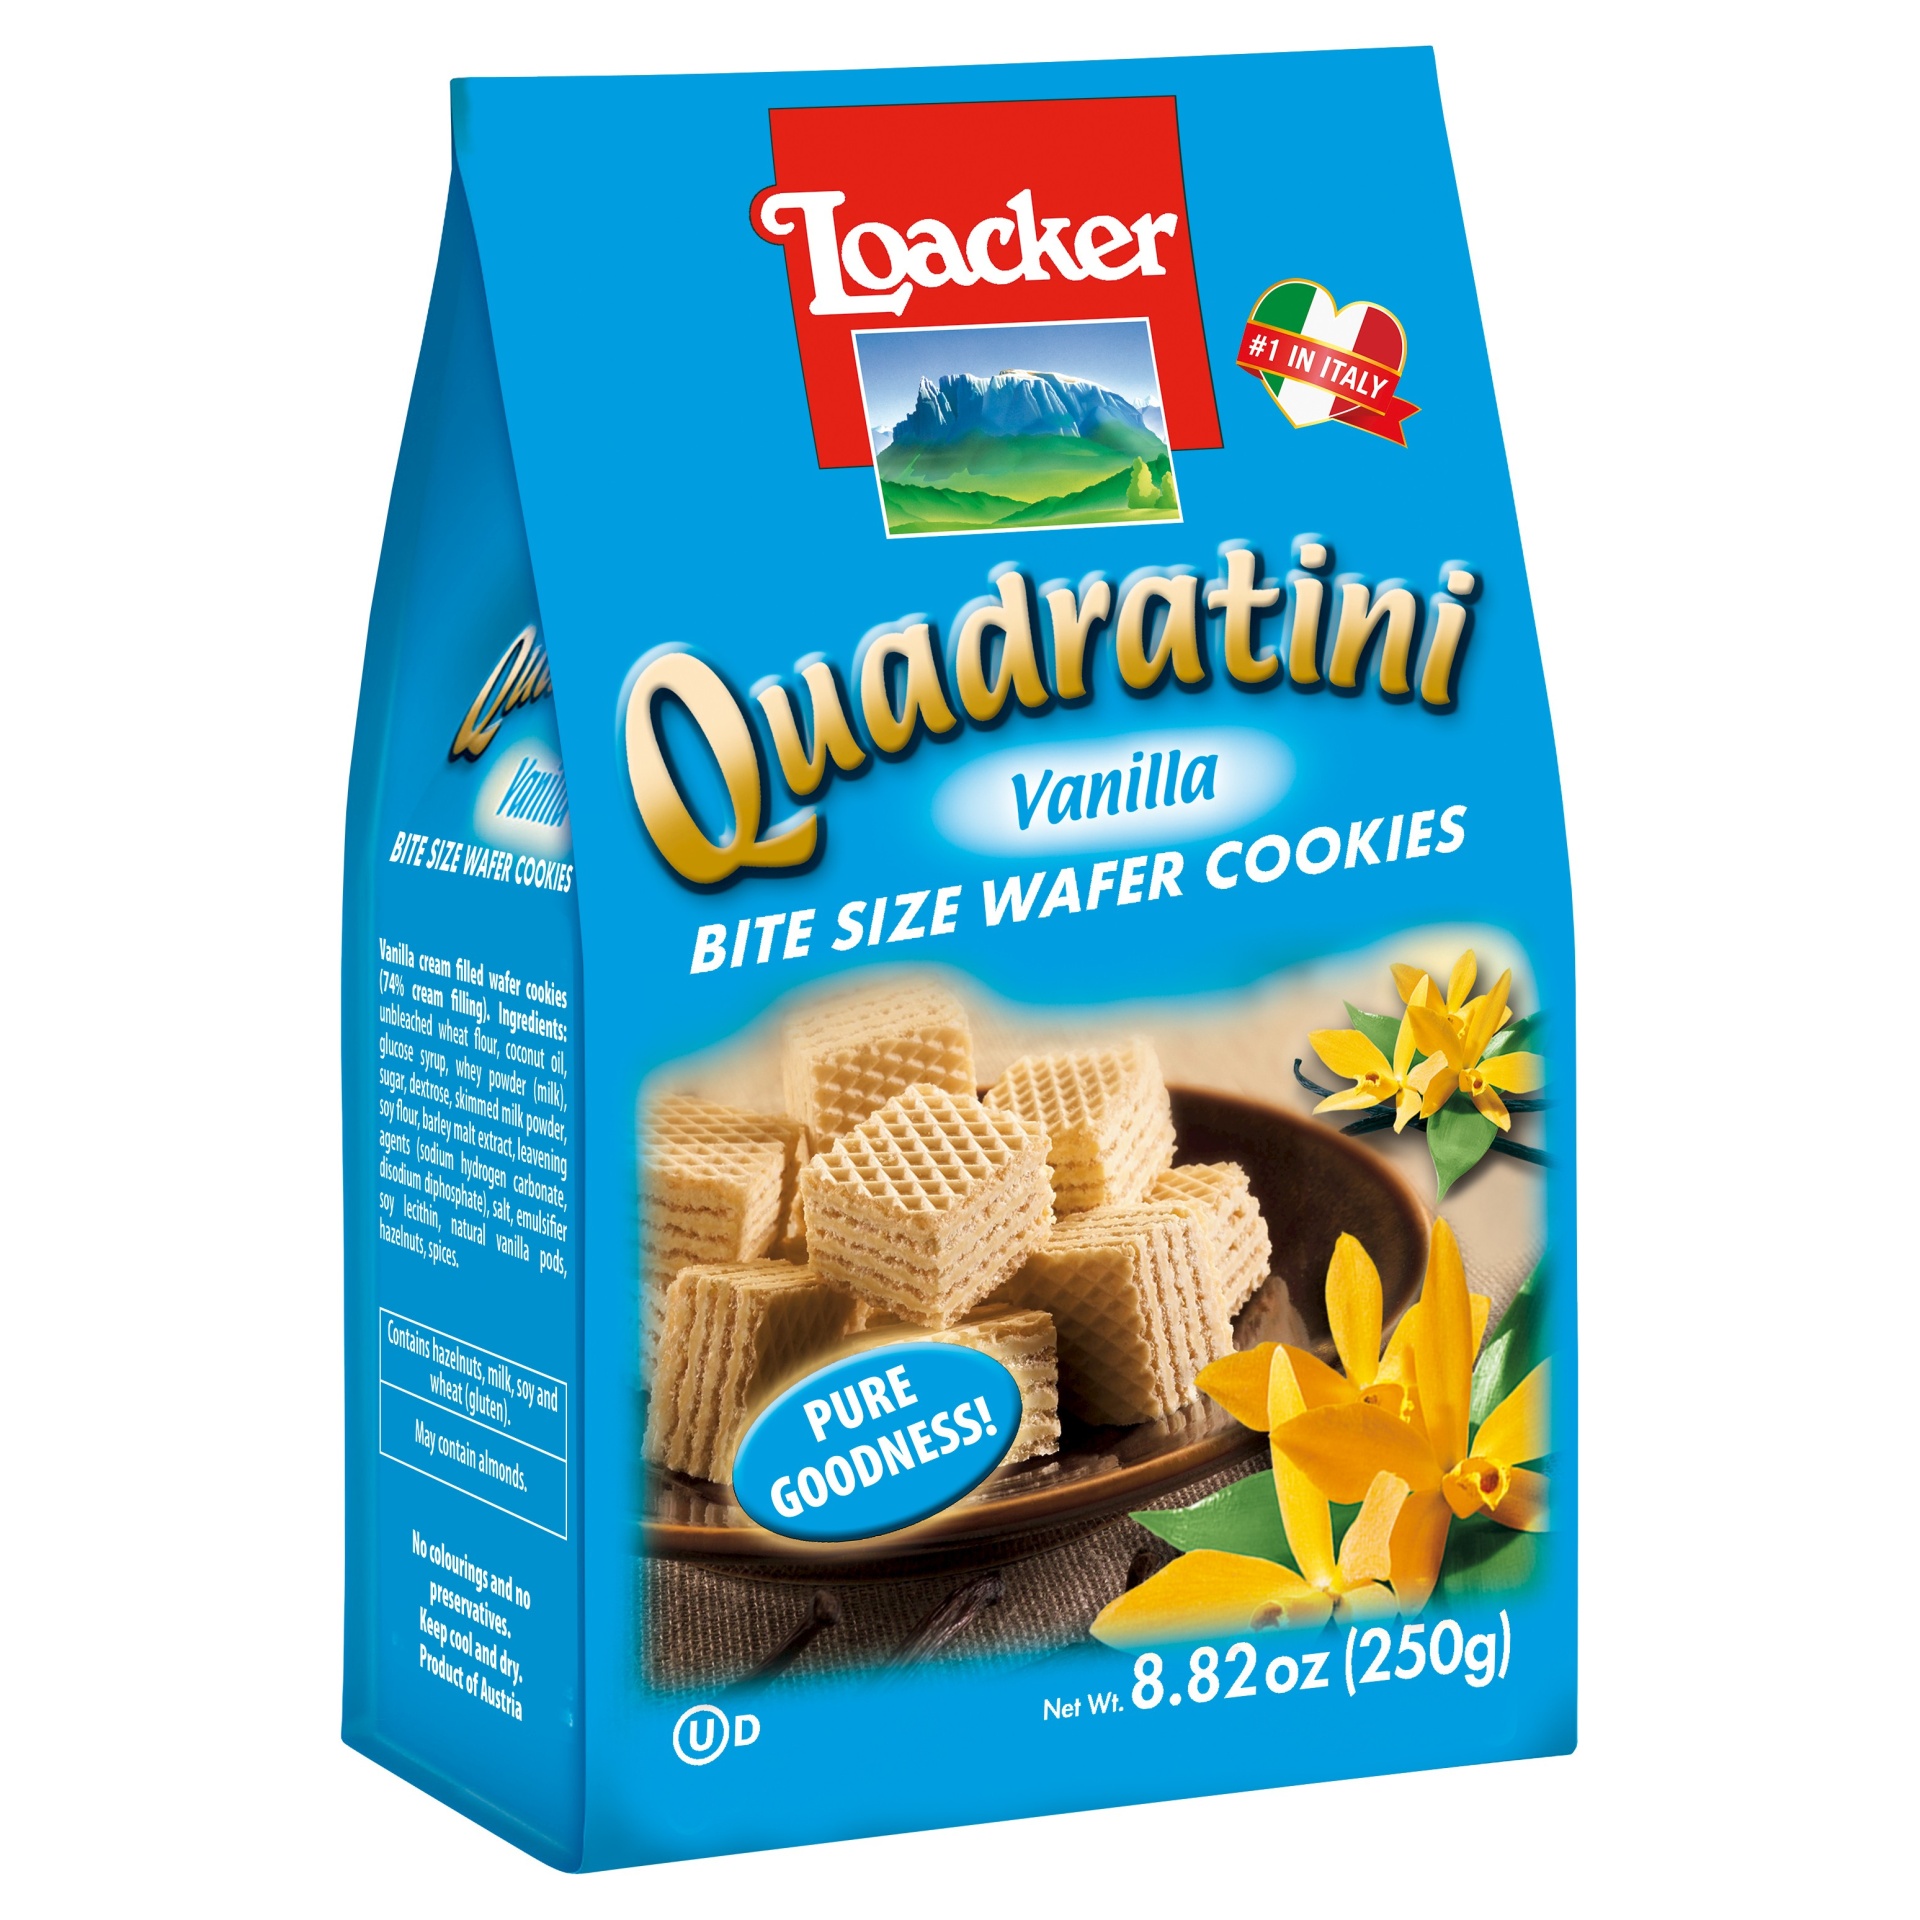 slide 1 of 1, Loacker Quadratini Vanilla Bite Size Wafer Cookies, 8.82 oz